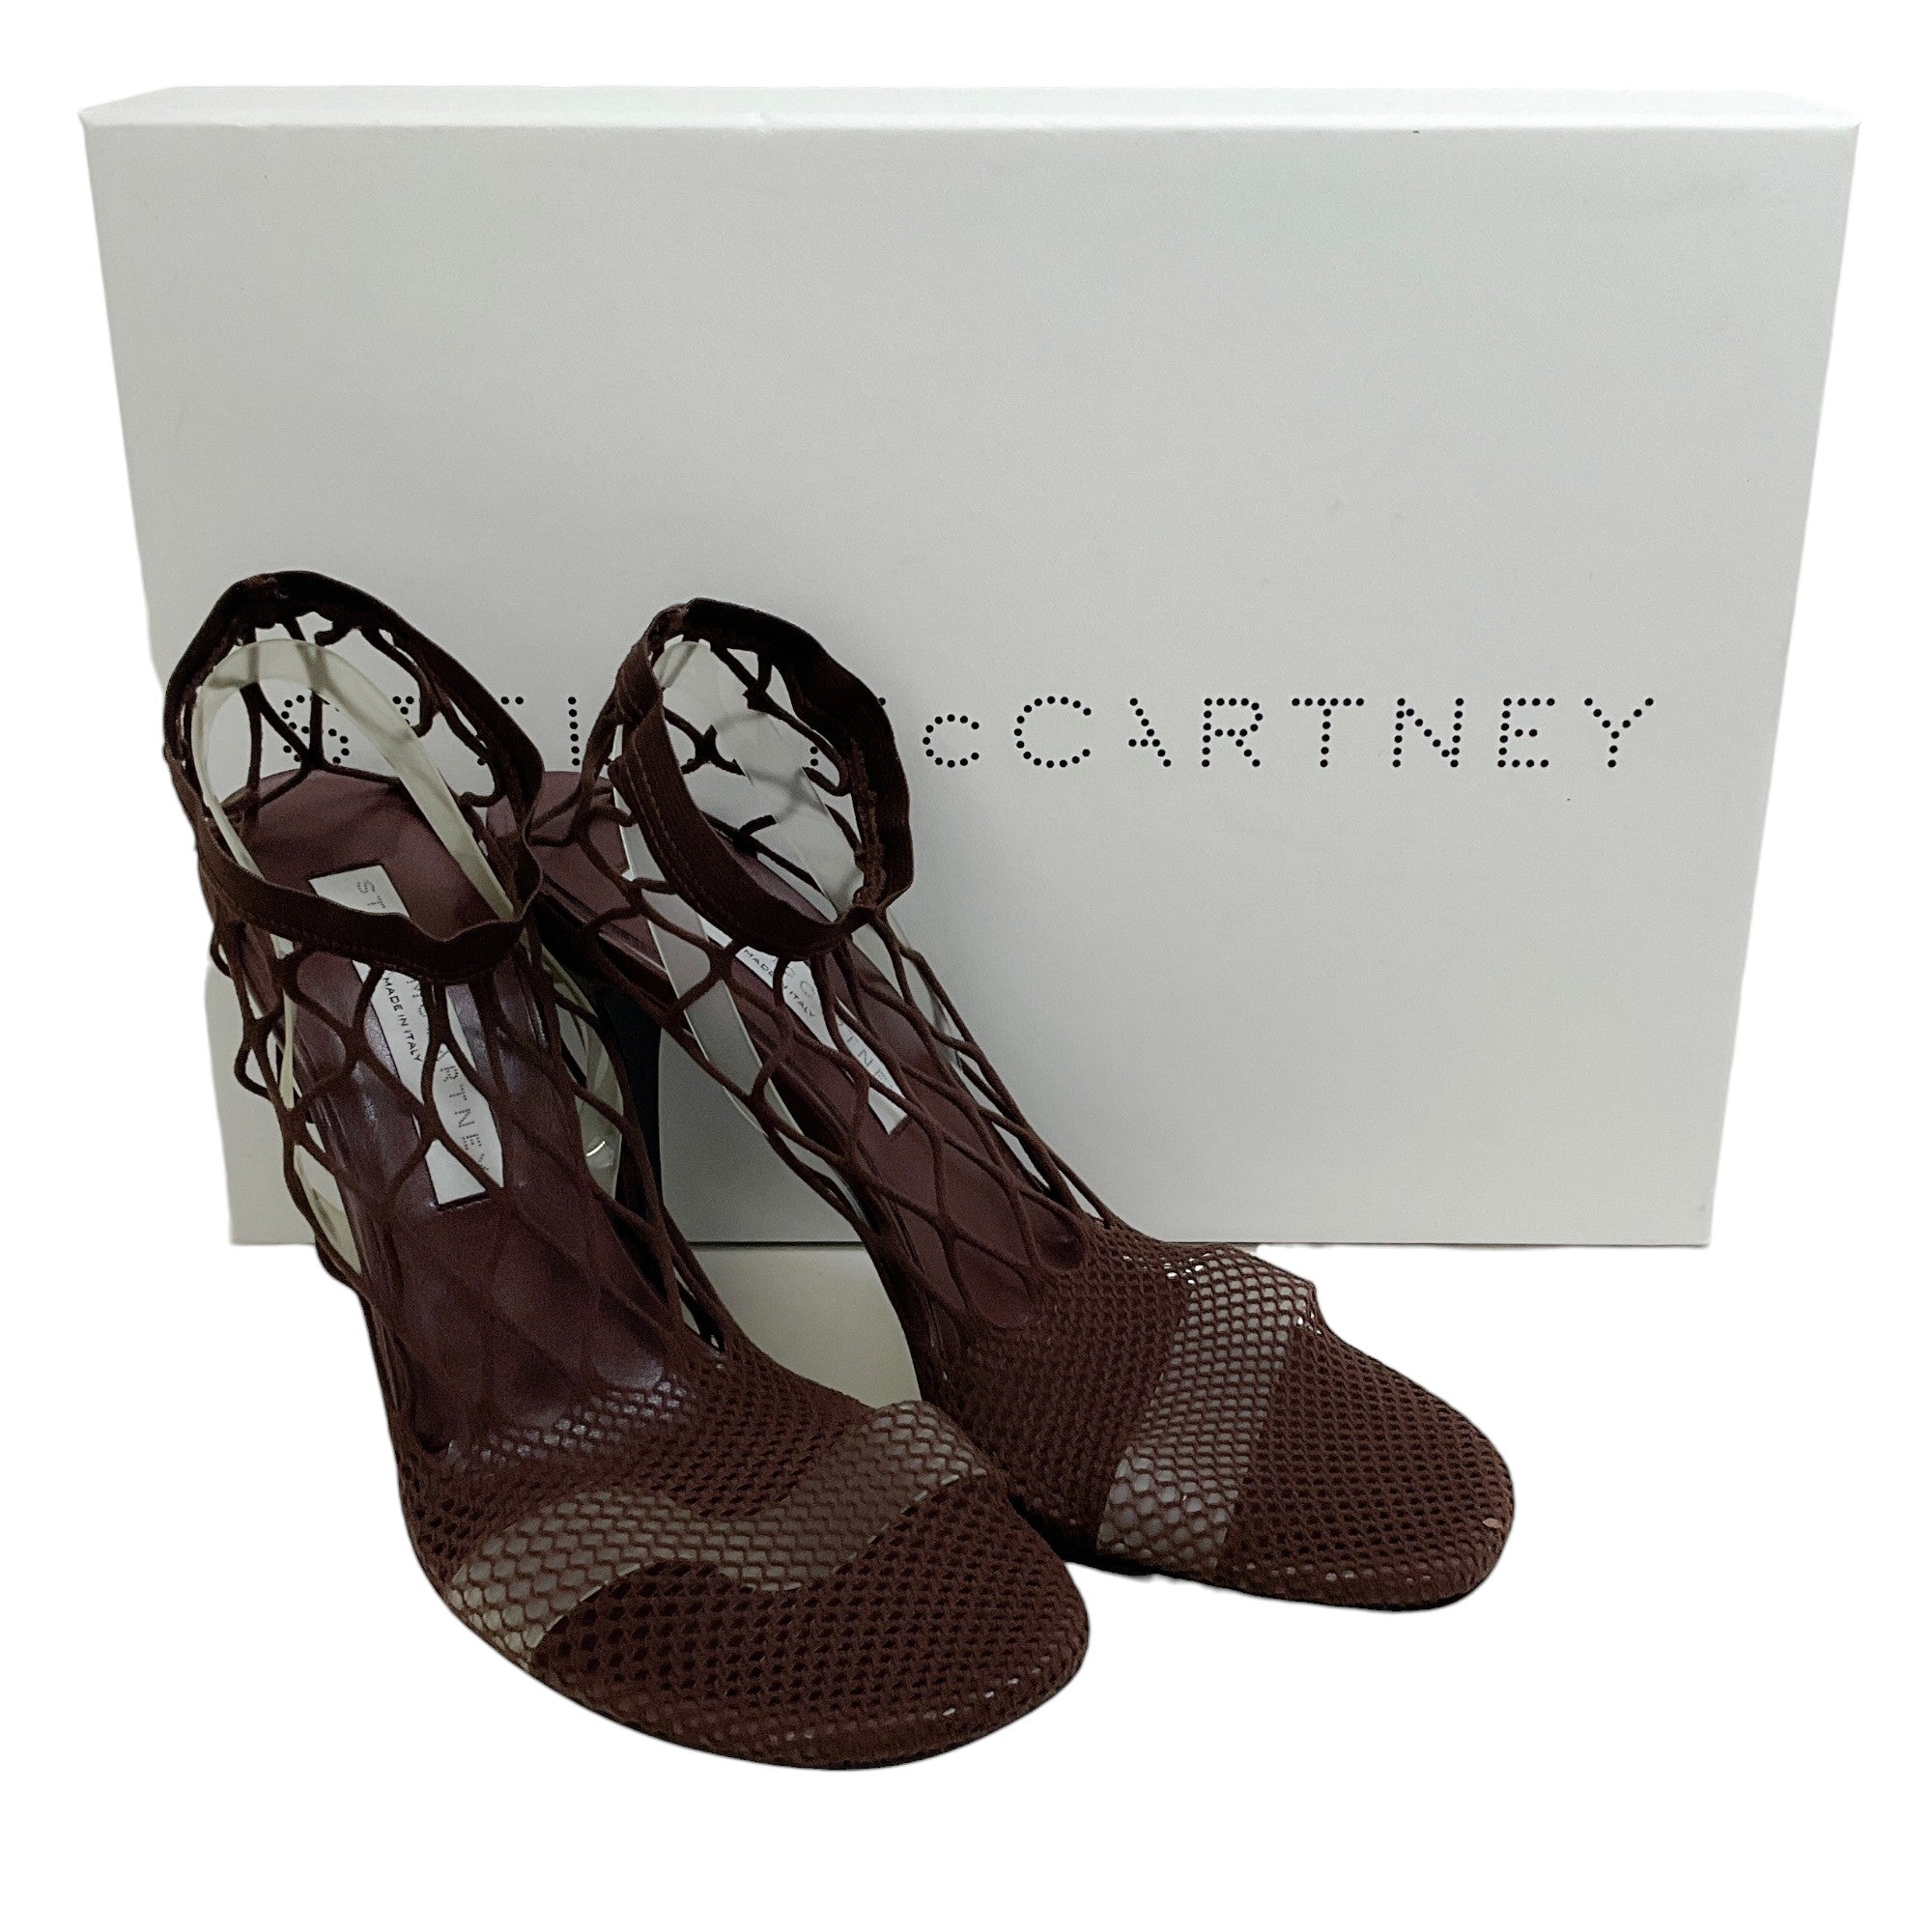 Stella McCartney Chocolate Fishnet Sandals